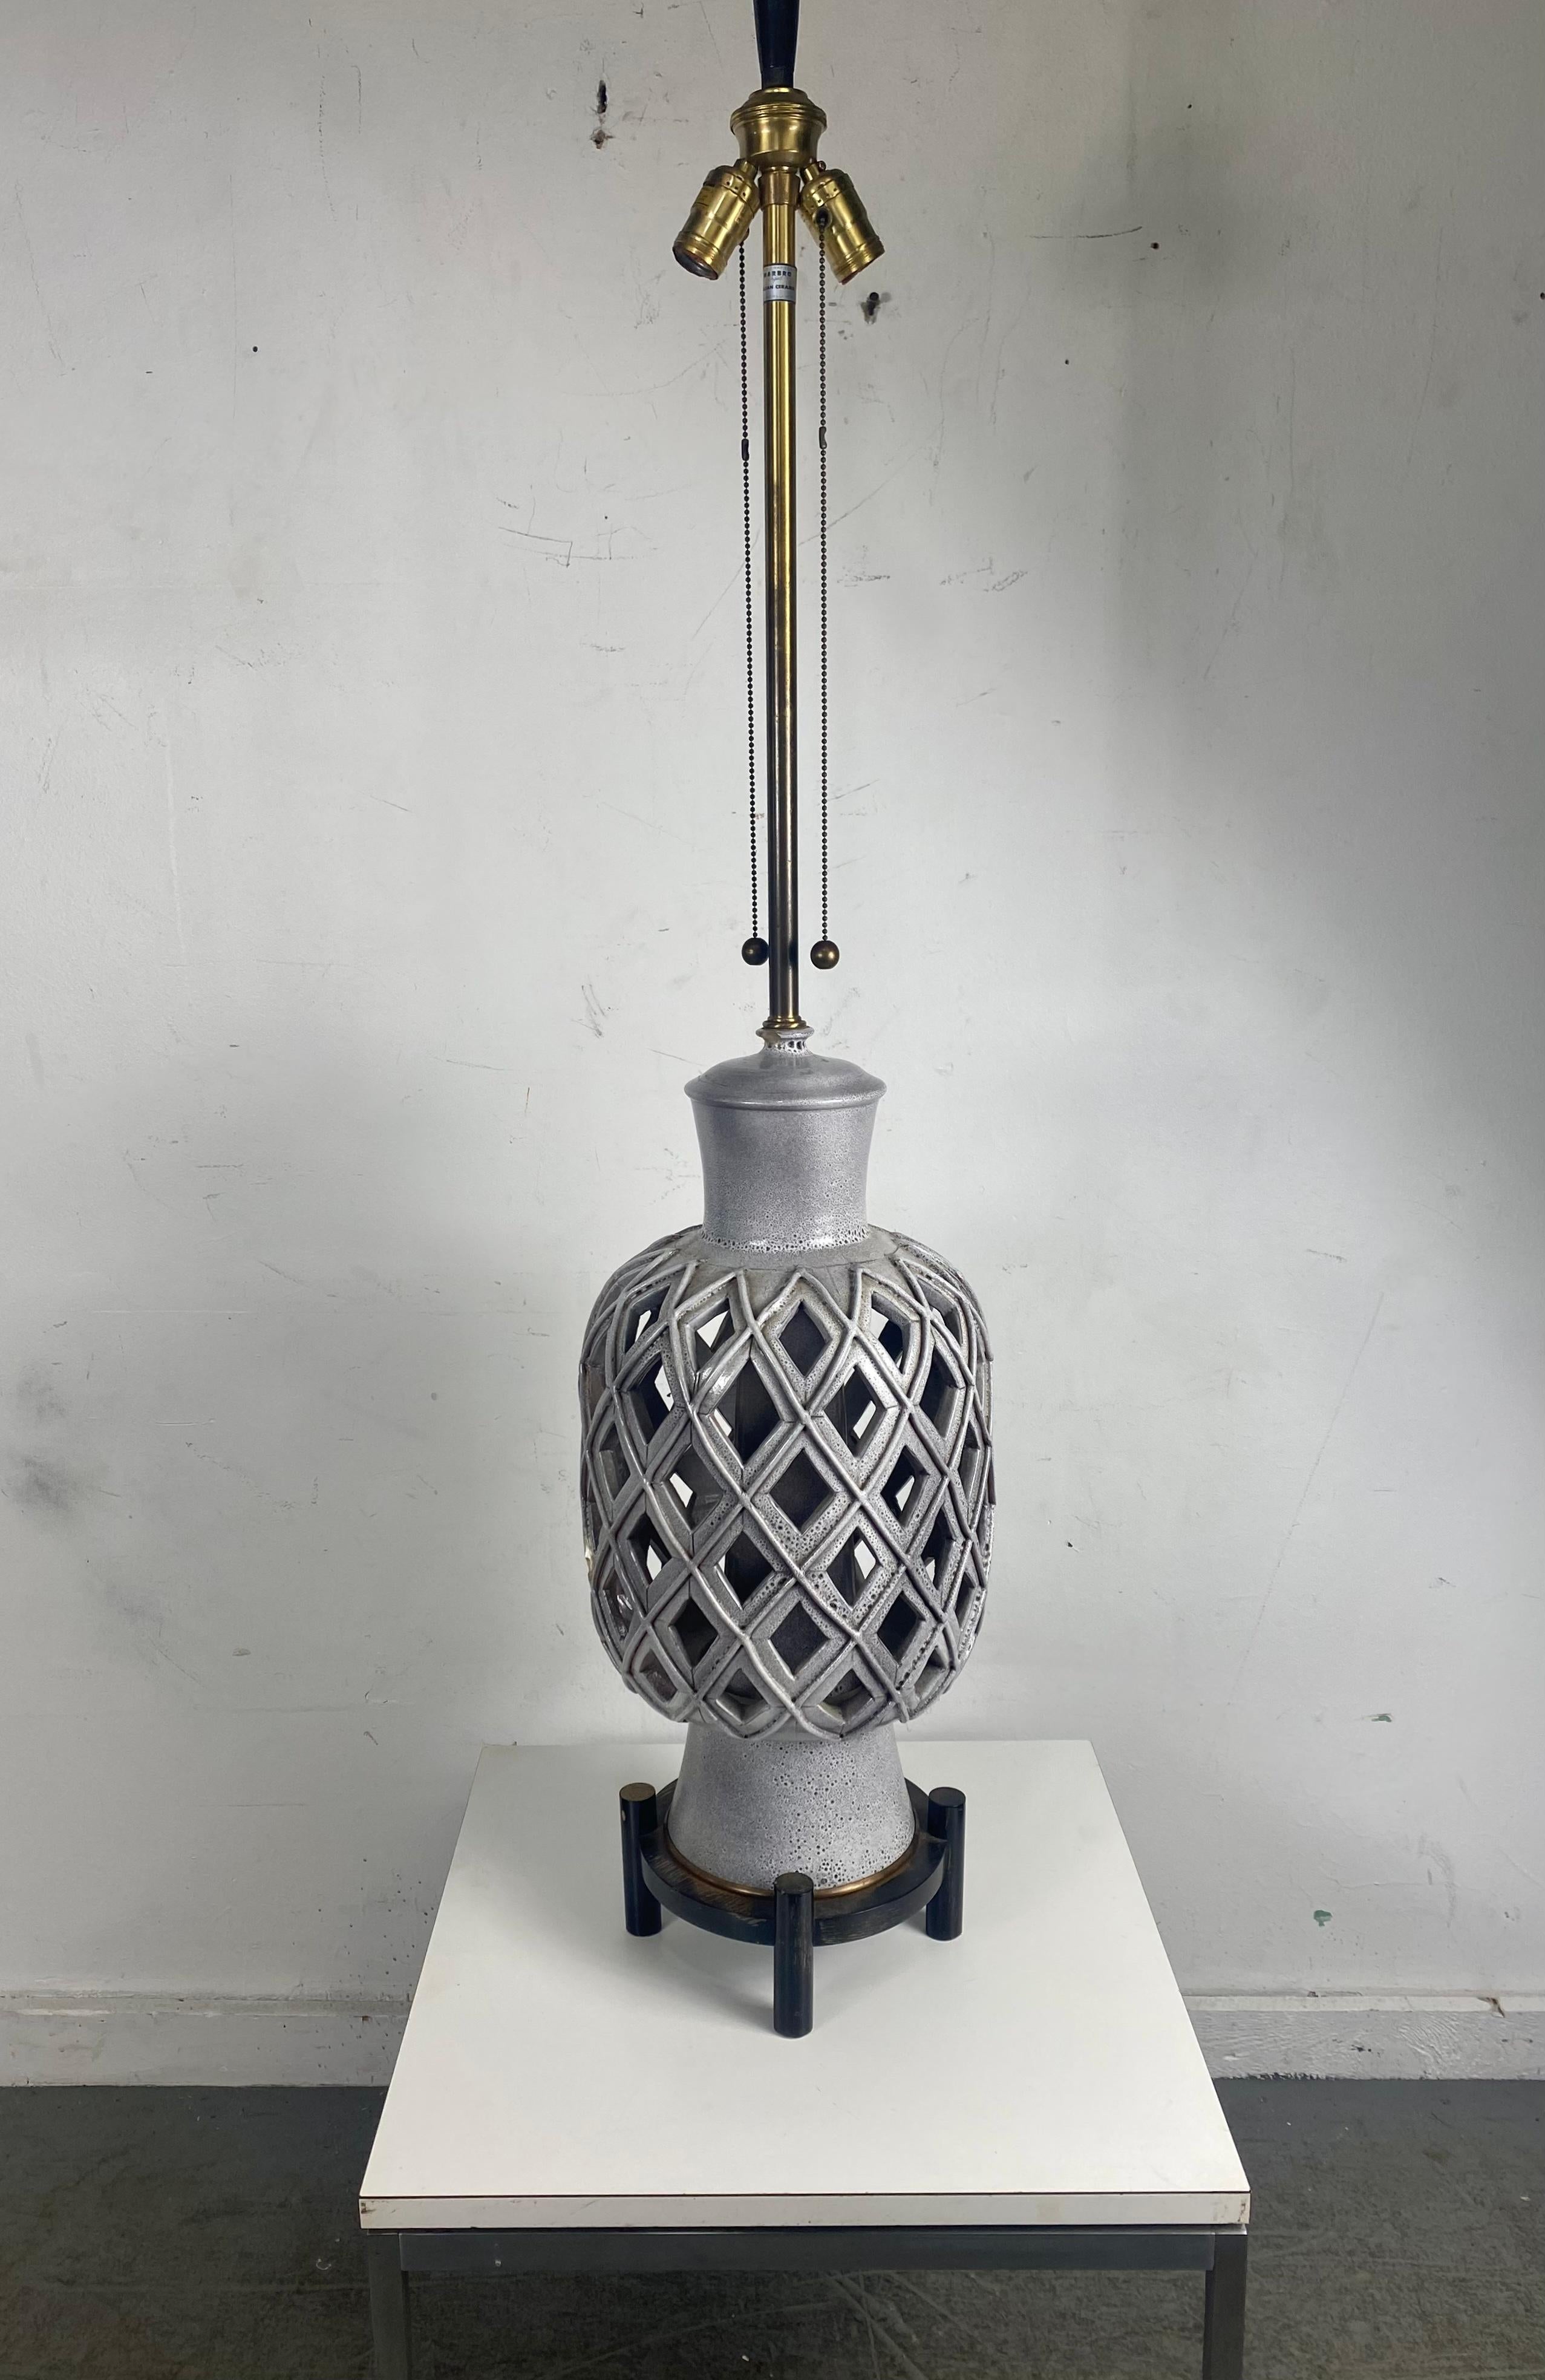 Mid-20th Century Monumental Italian Ceramic Lamp by Marbro Lamp Company / Modernist